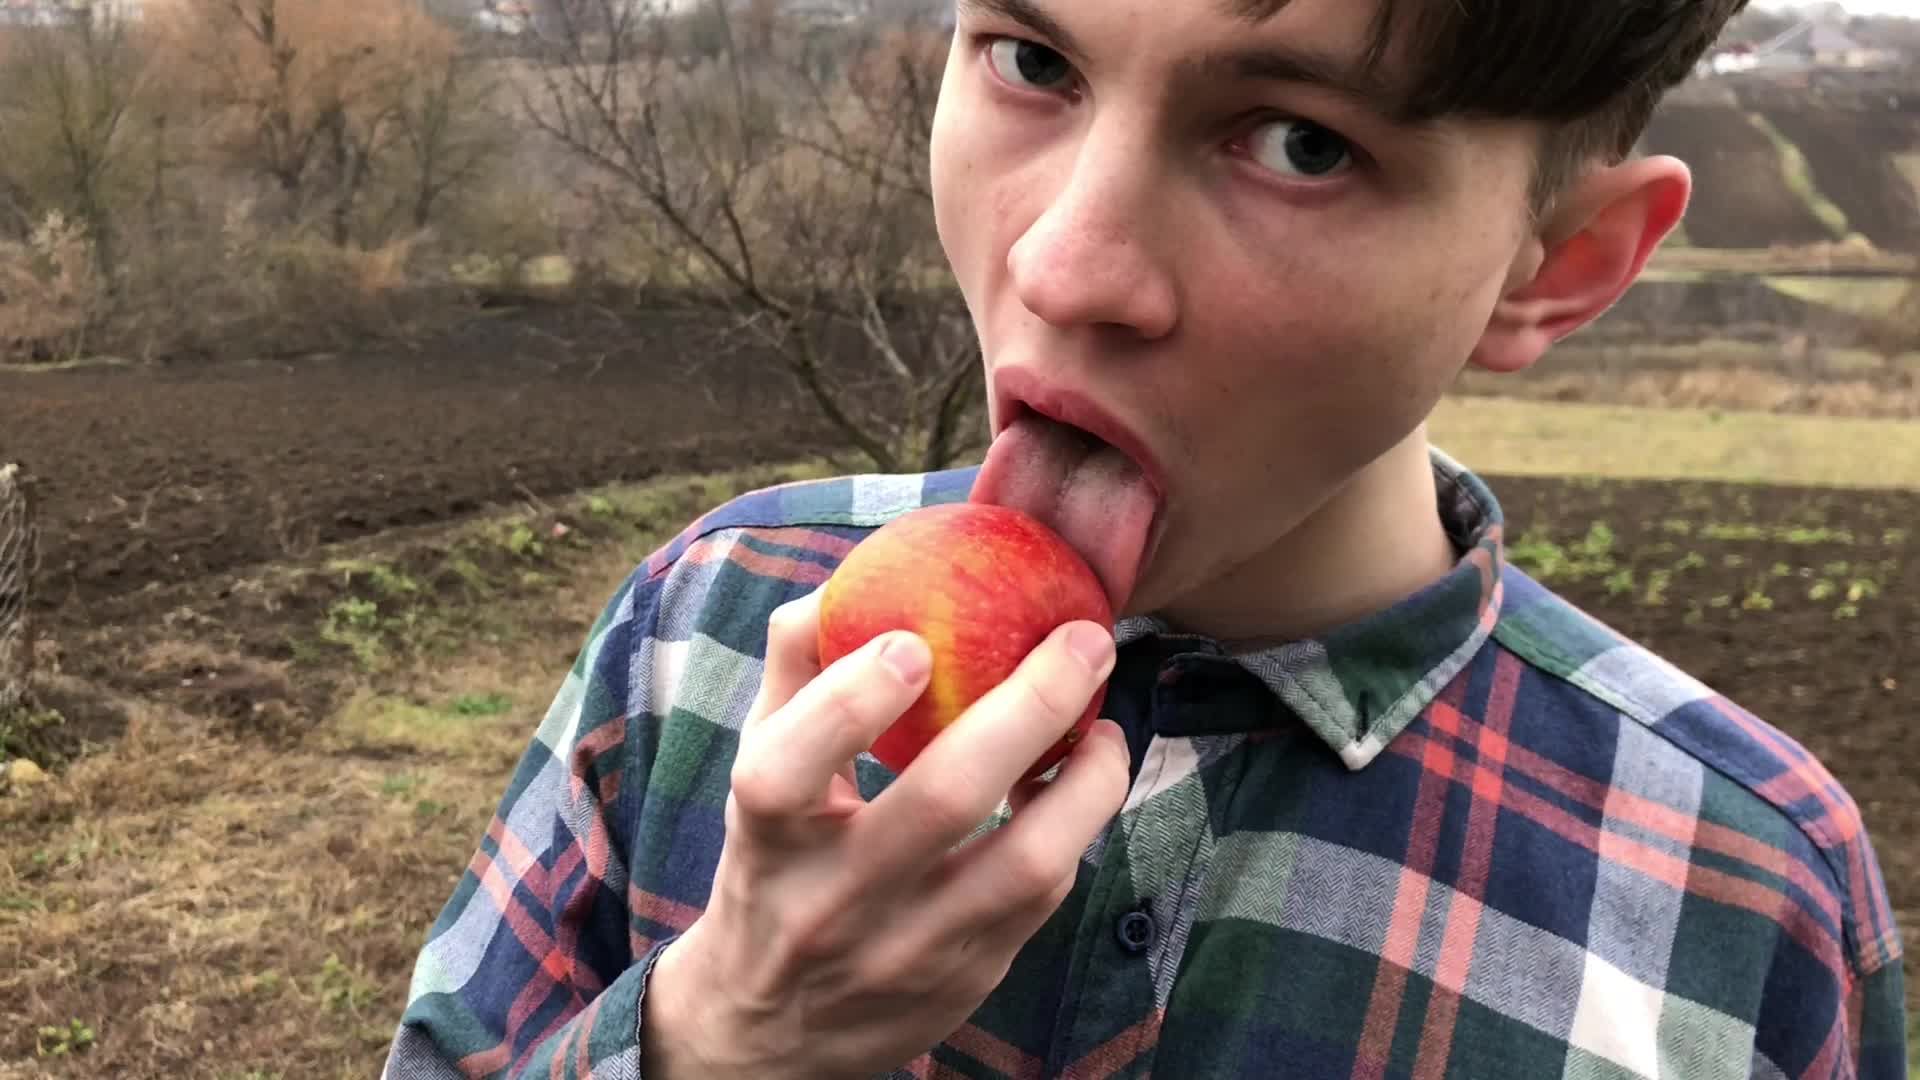 Enjoying the apples eat and lickFULLHD